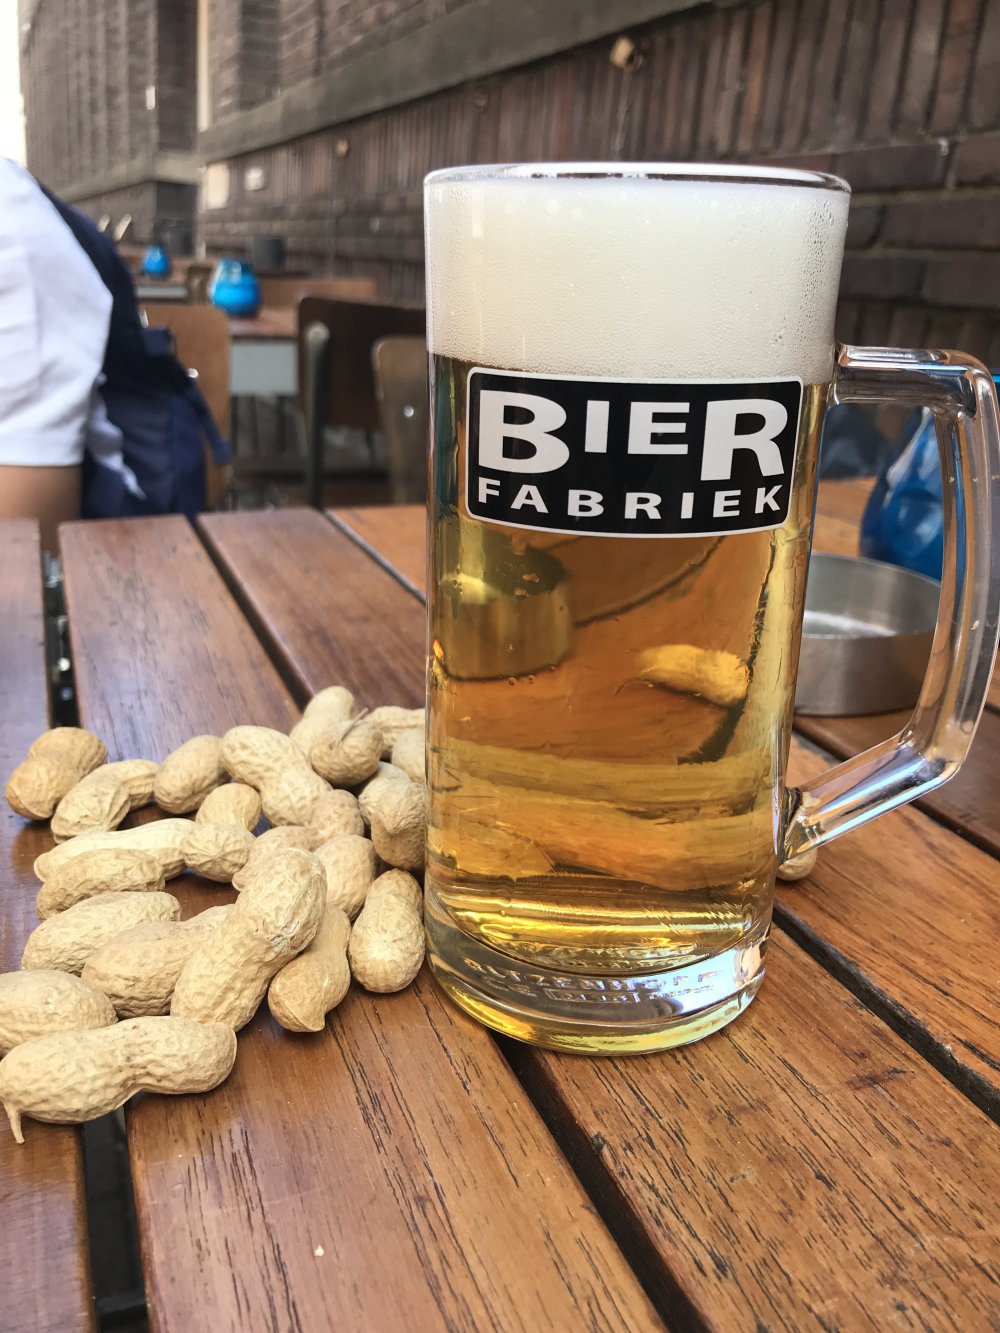 bier fabriek amsterdam